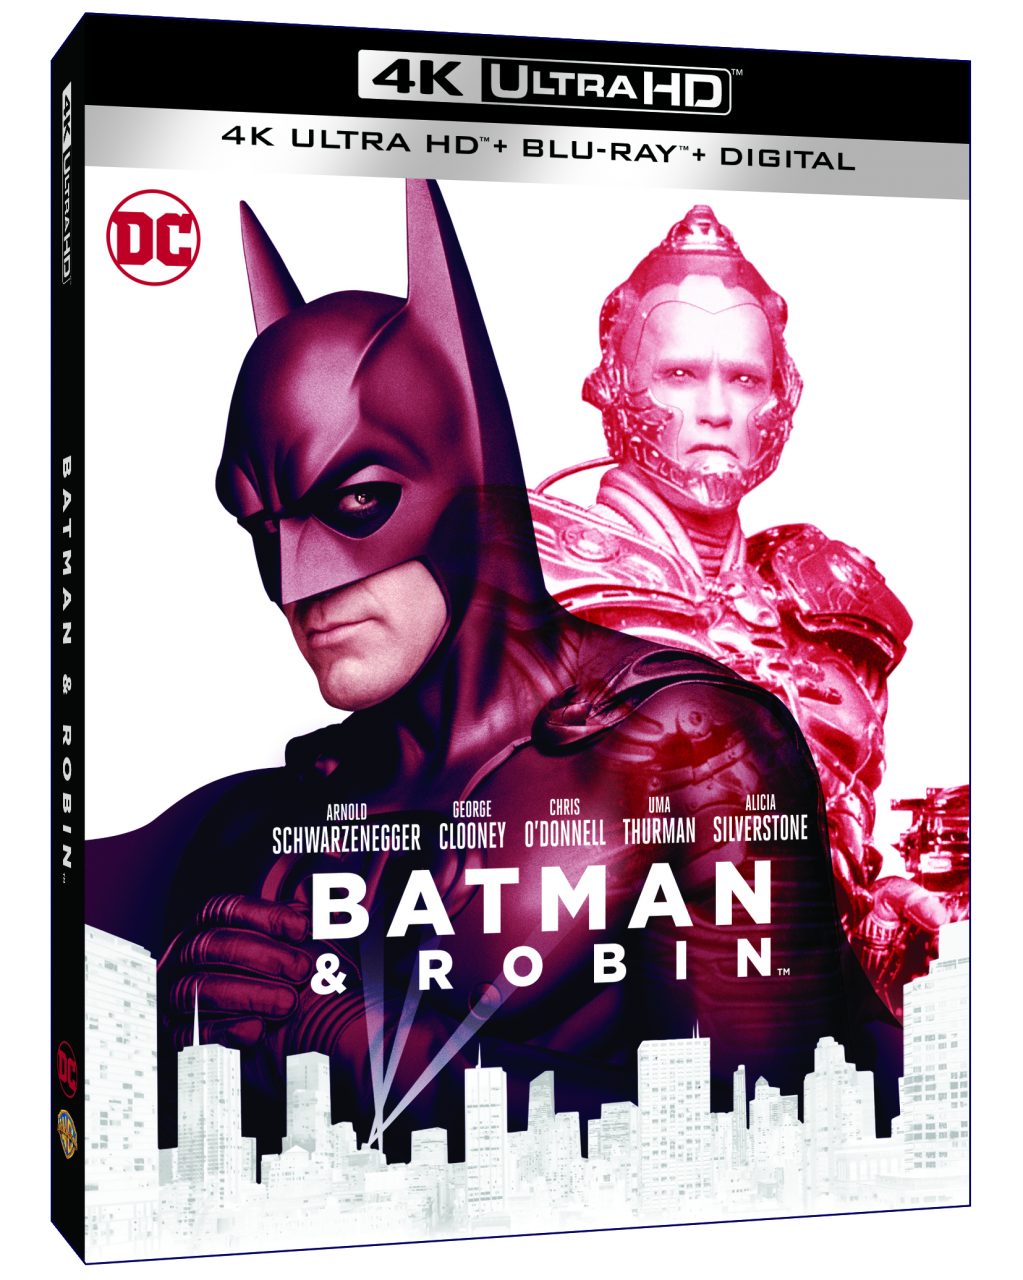 Batman & Robin 4K Ultra HD cover (Warner Bros. Home Entertainment)